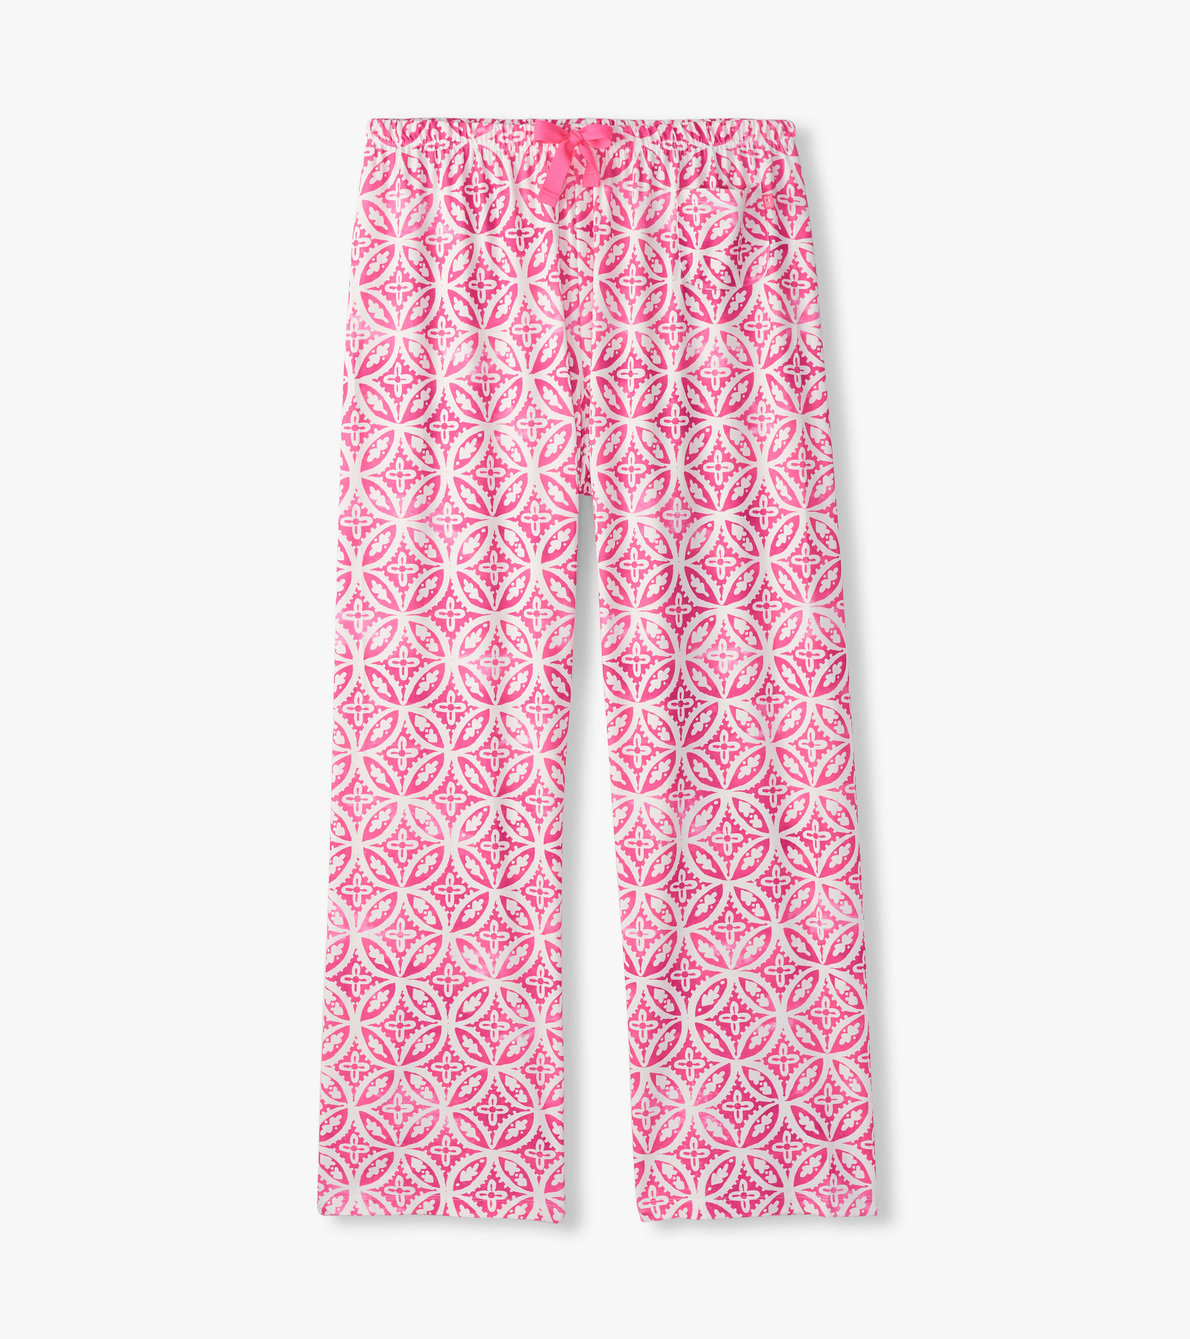 Agrandir l'image de Pantalon de pyjama et son sac – Lotus roses d’inspiration mandala